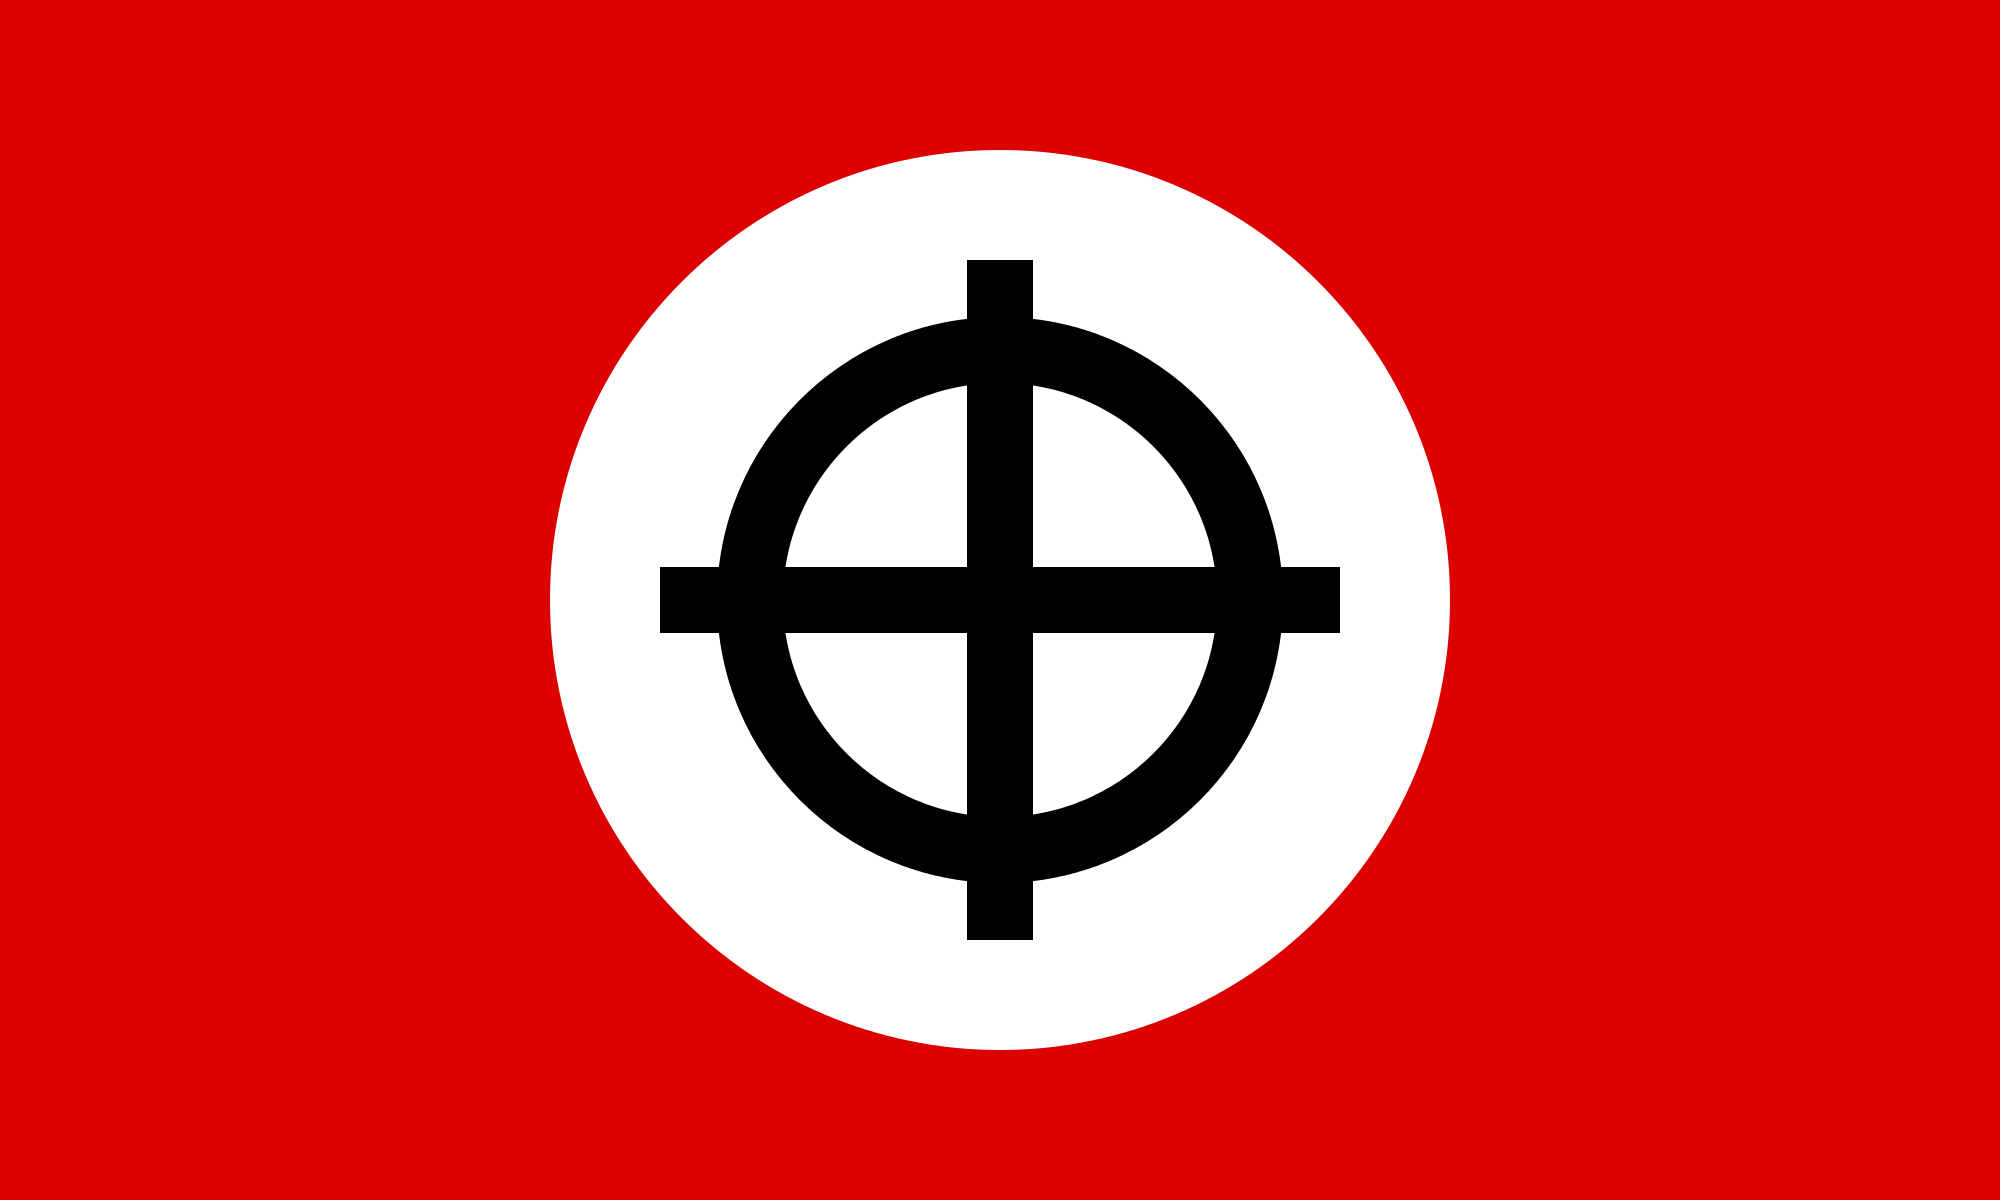 Fascist symbolism - Wikipedia, the free encyclopedia